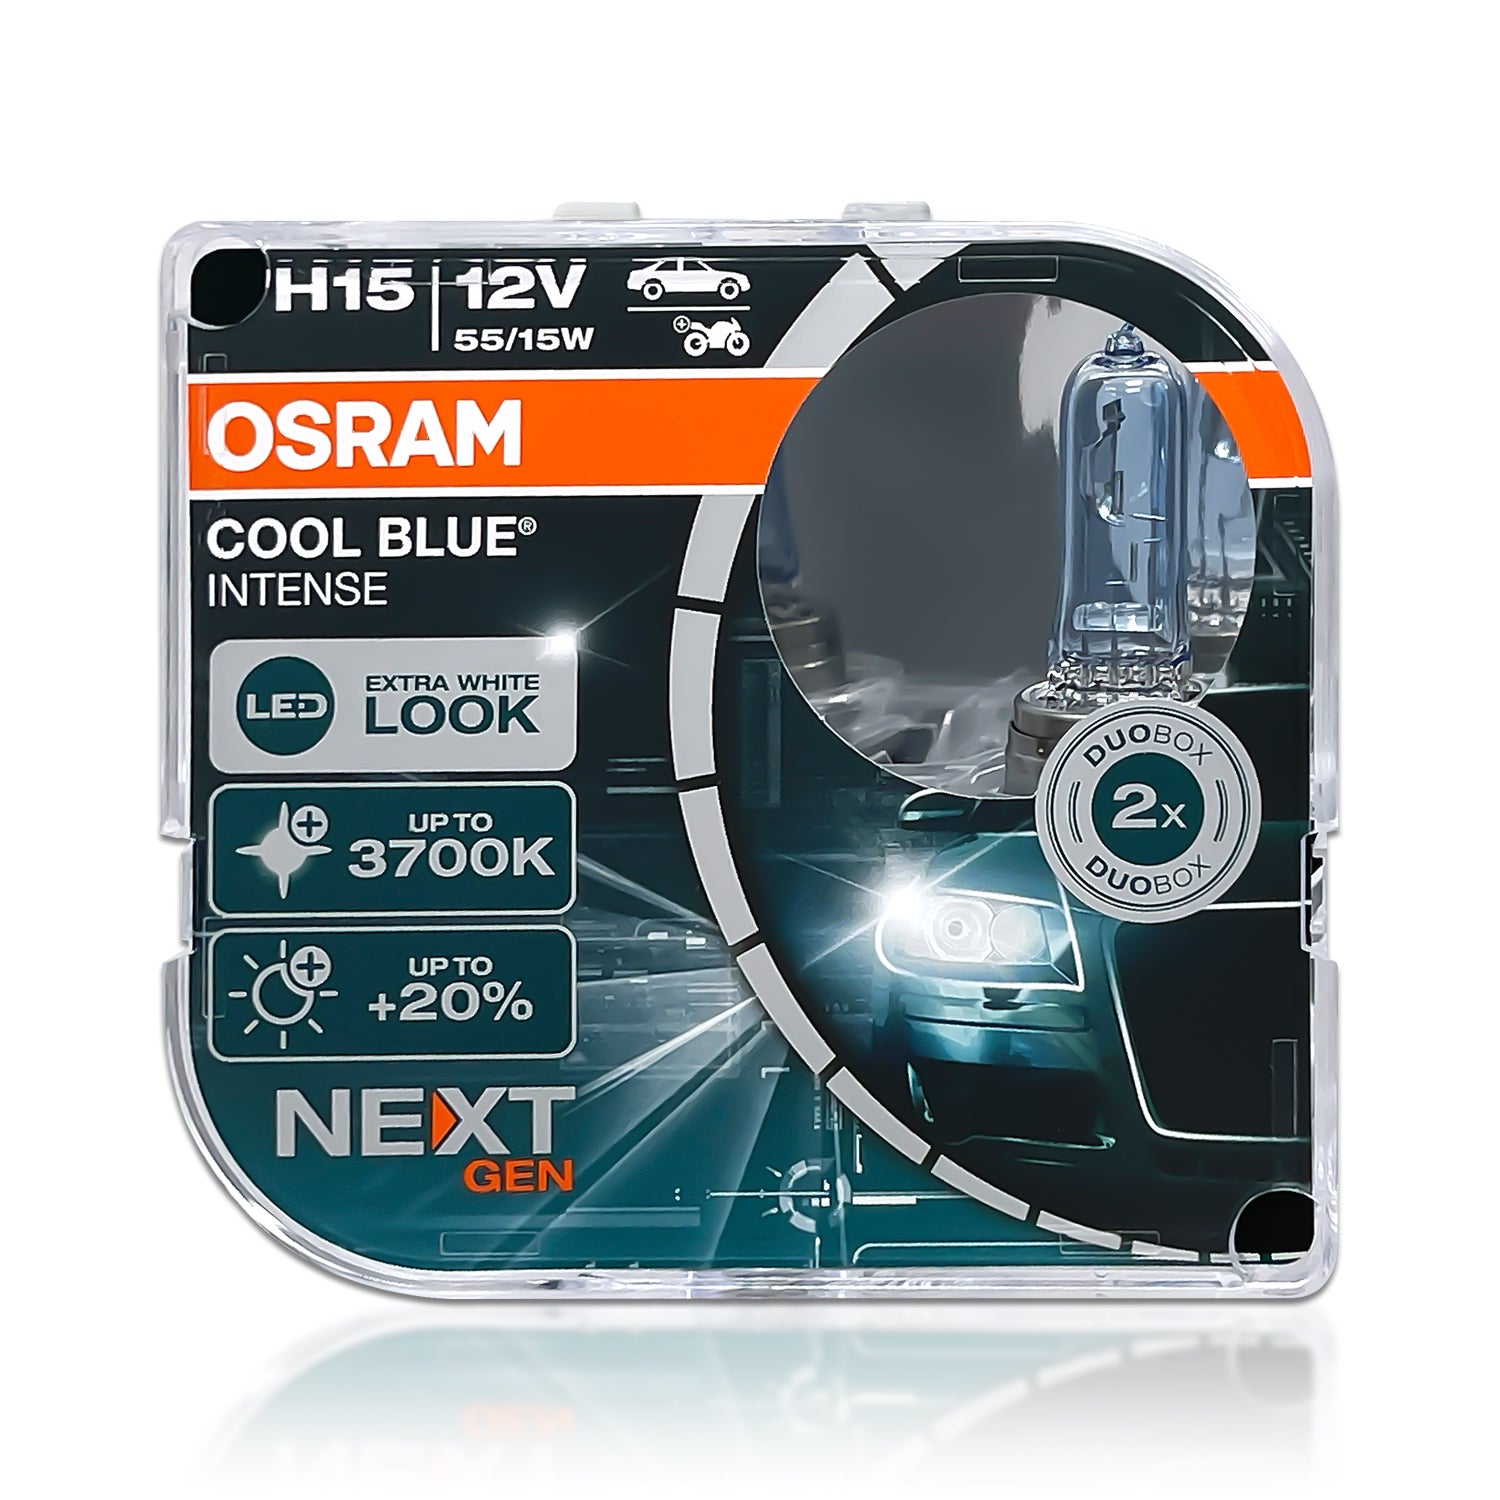 H15 12V Osram Cool Blue Intense 15/55W, 2 pack